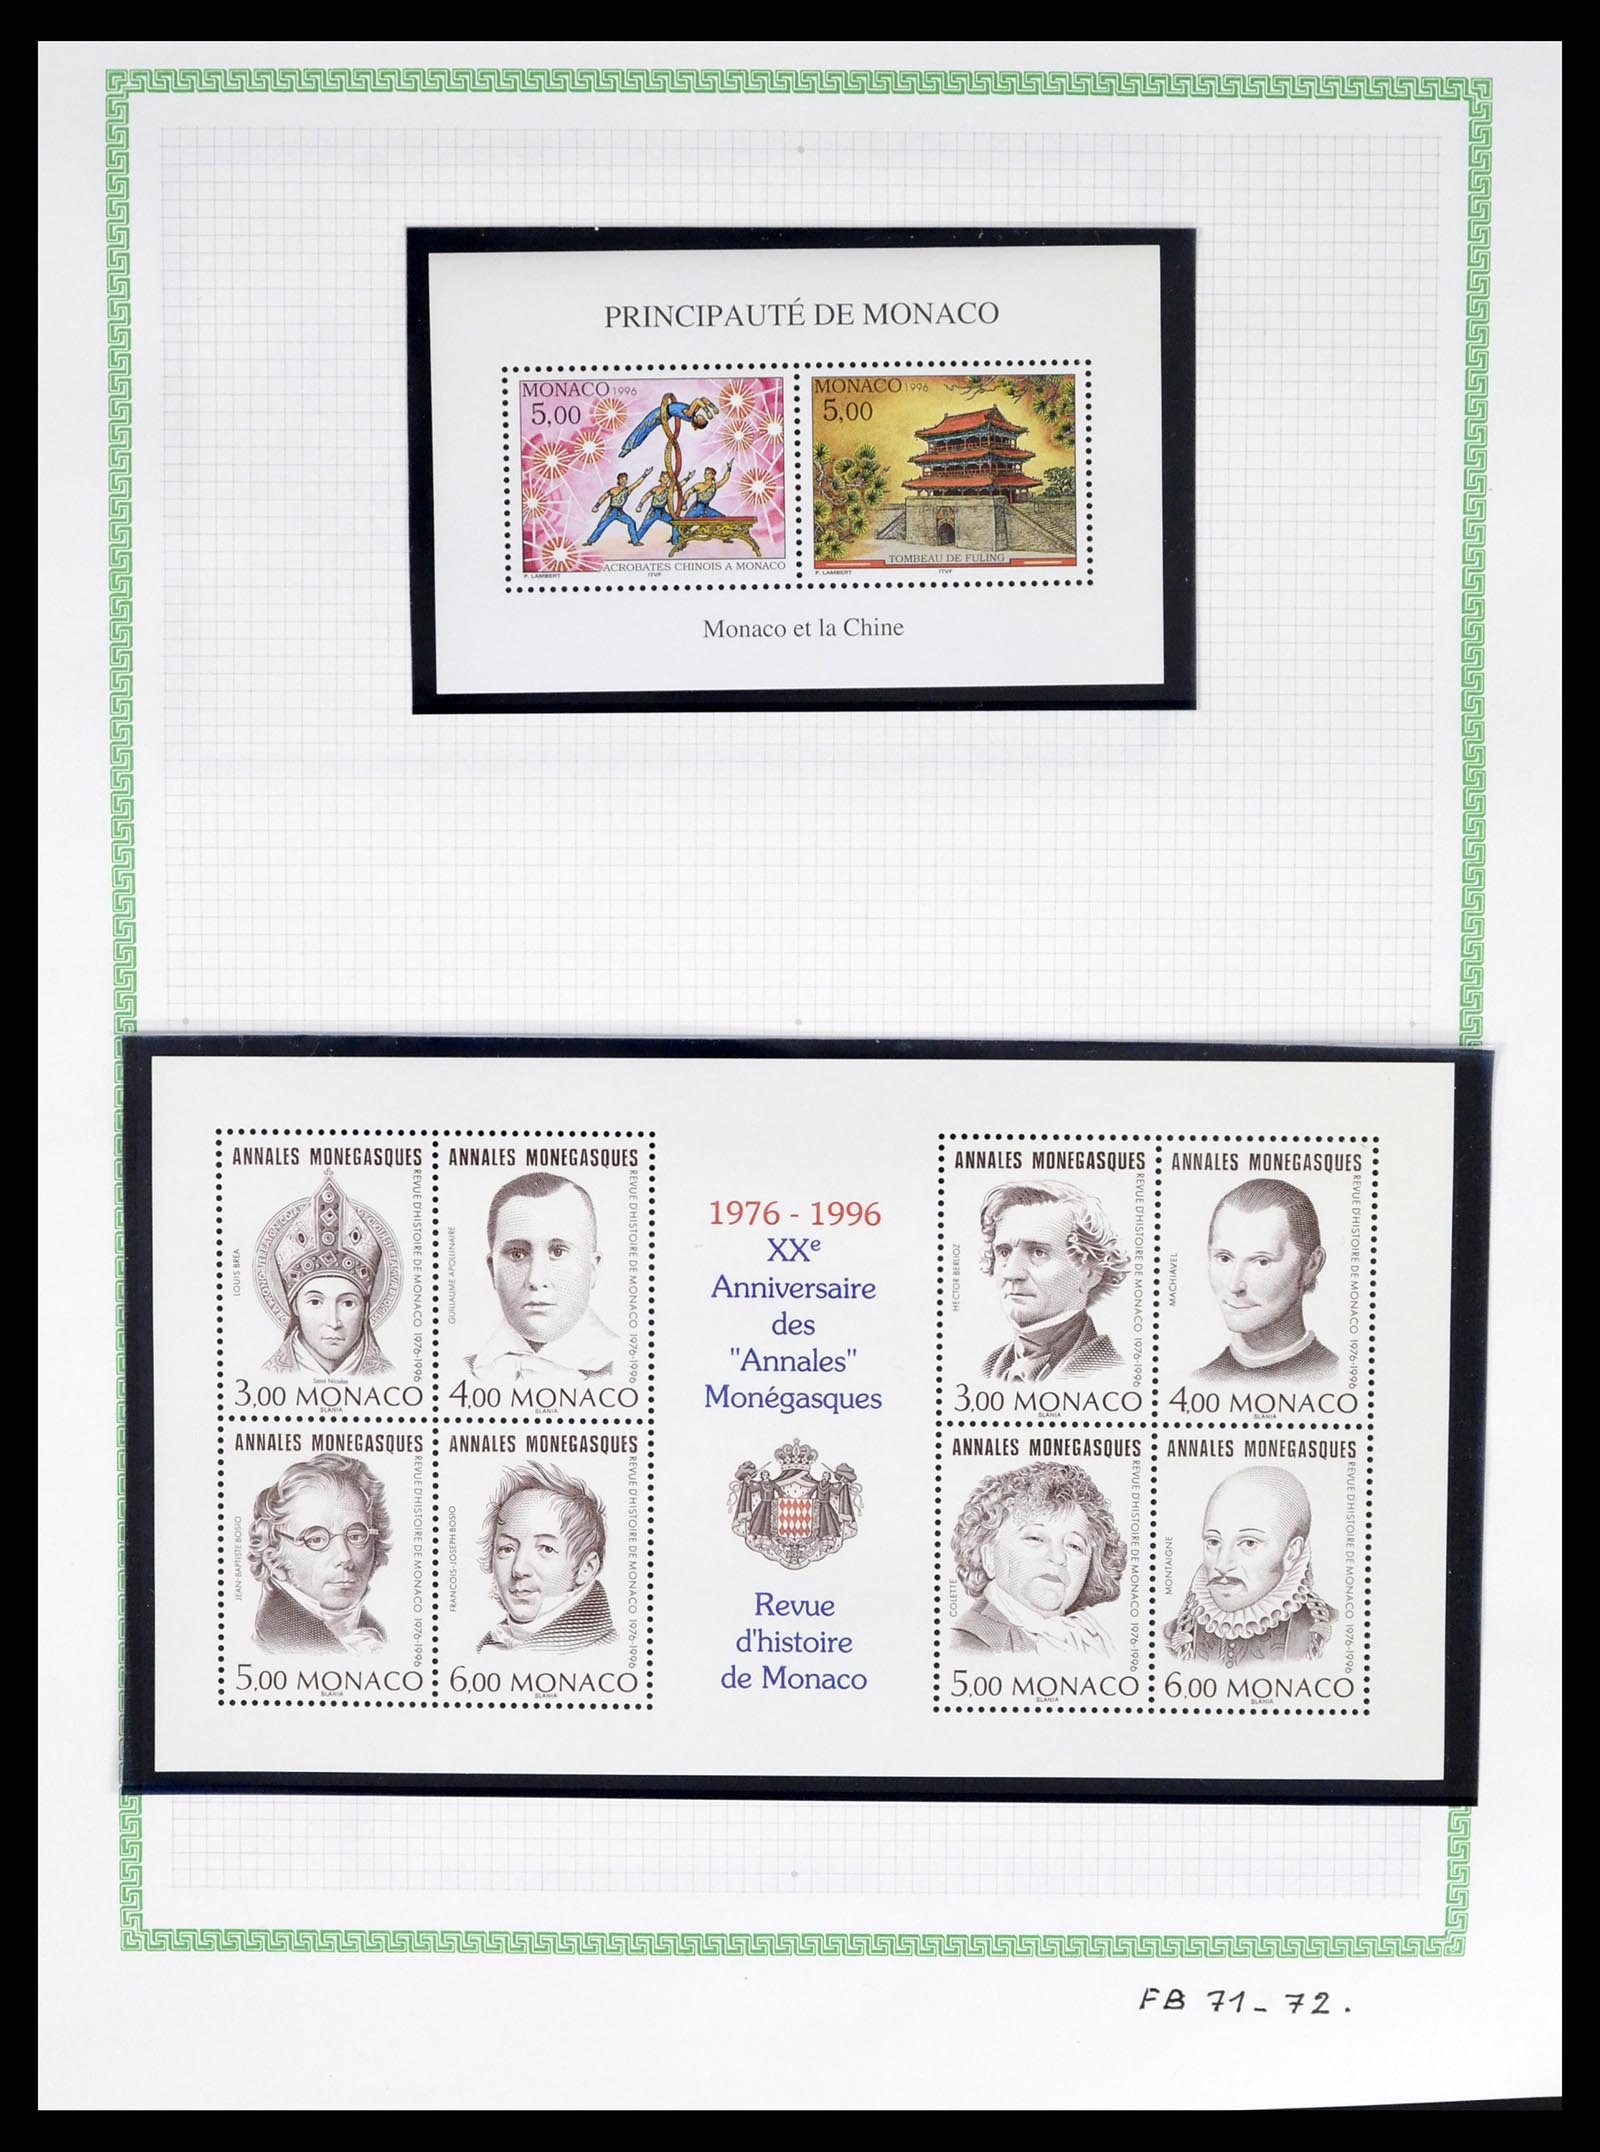 37380 448 - Stamp collection 37380 Monaco 1921-2015.